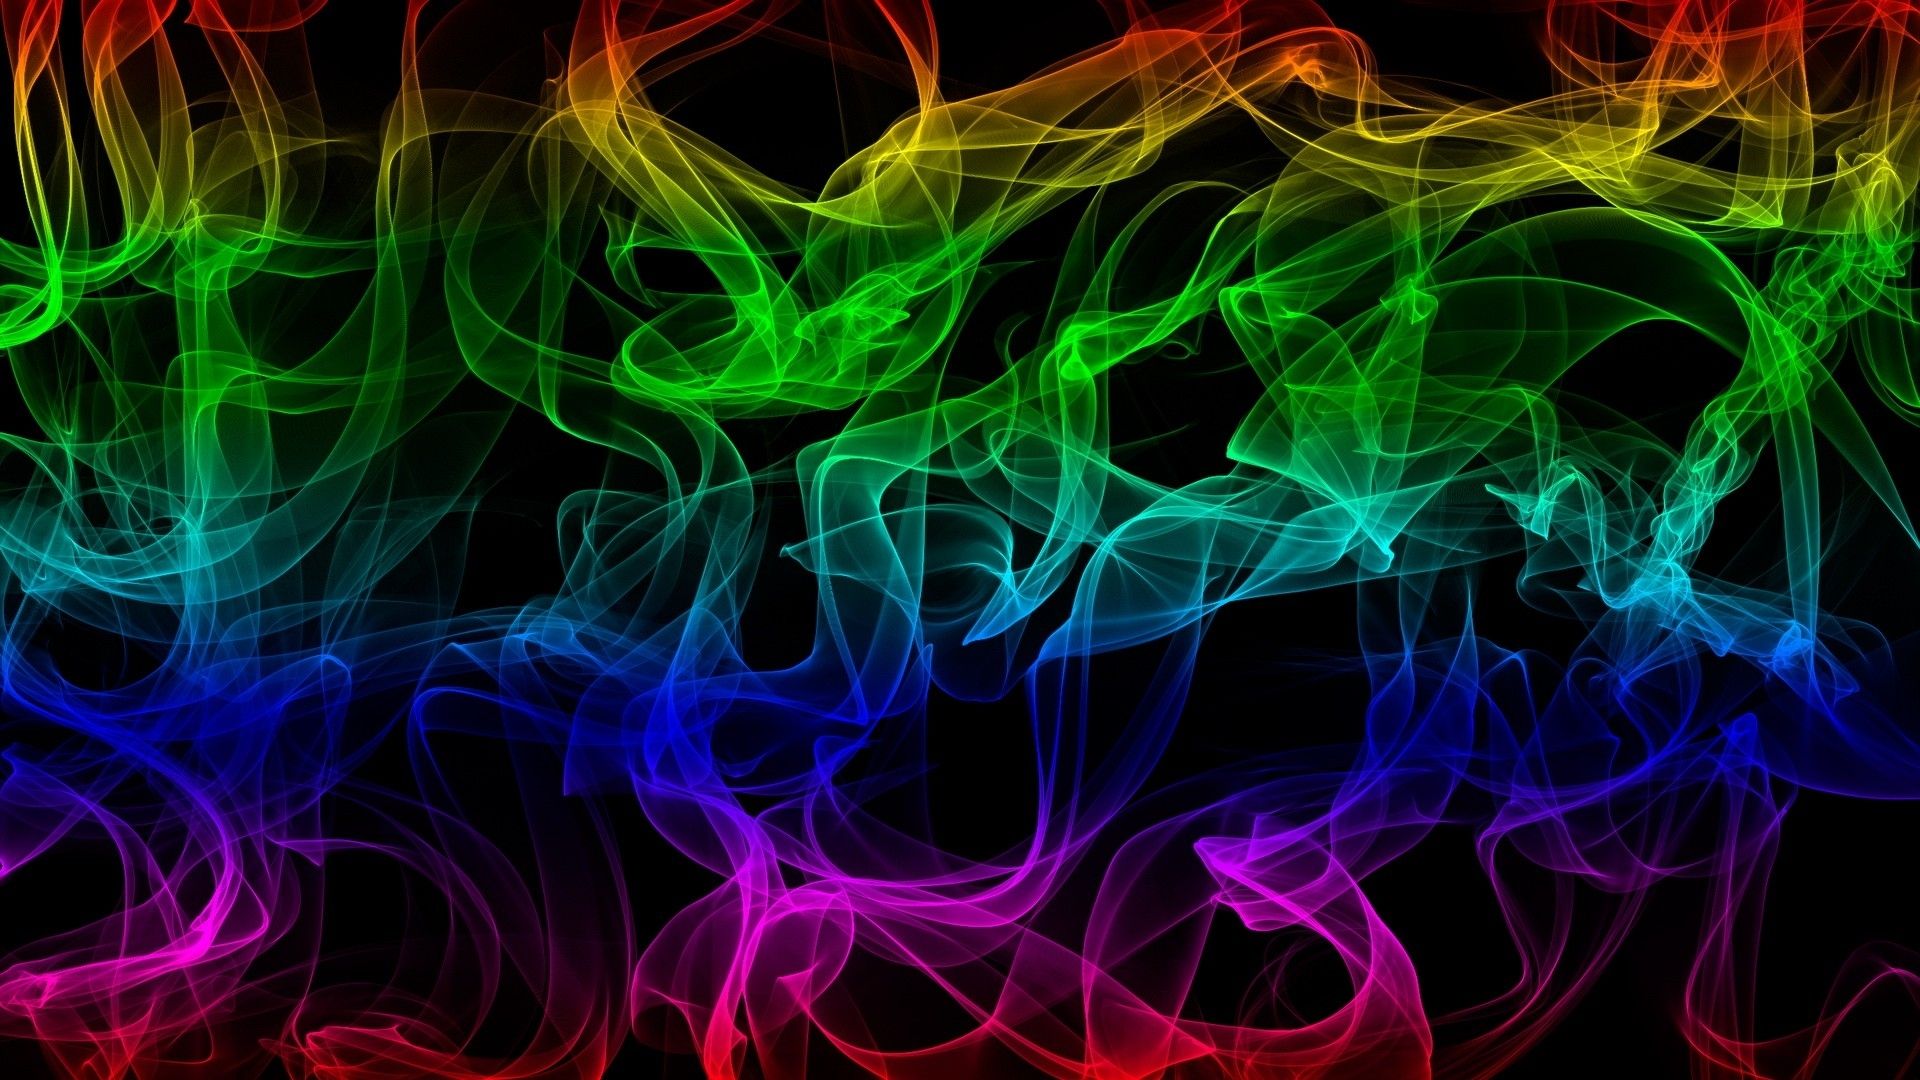 Fondos de pantalla abstractos gratis Rainbow High Definition en abstracto »Monodomo